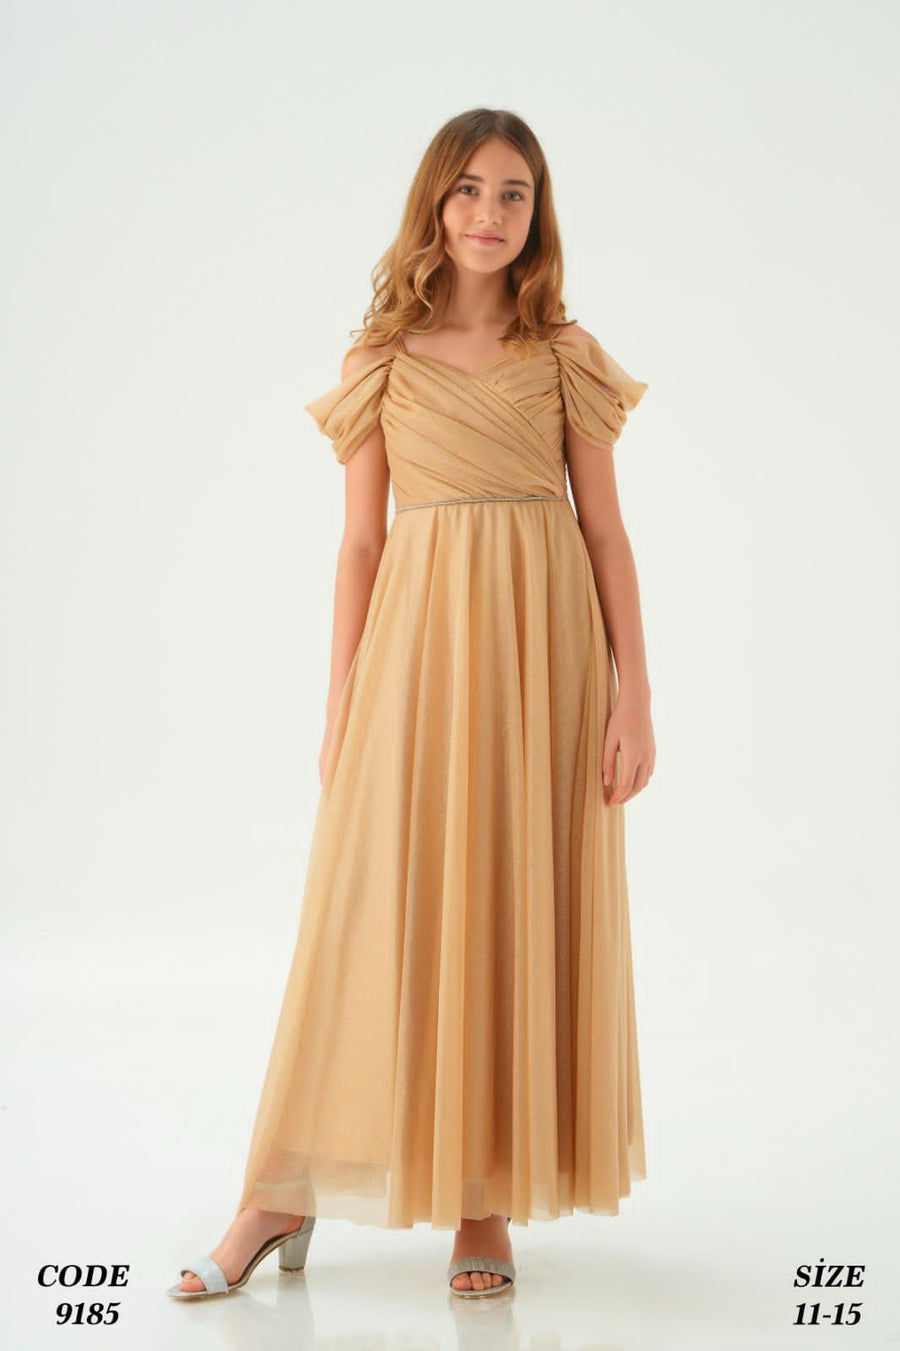 Teen Lovely Gold Dress 9185